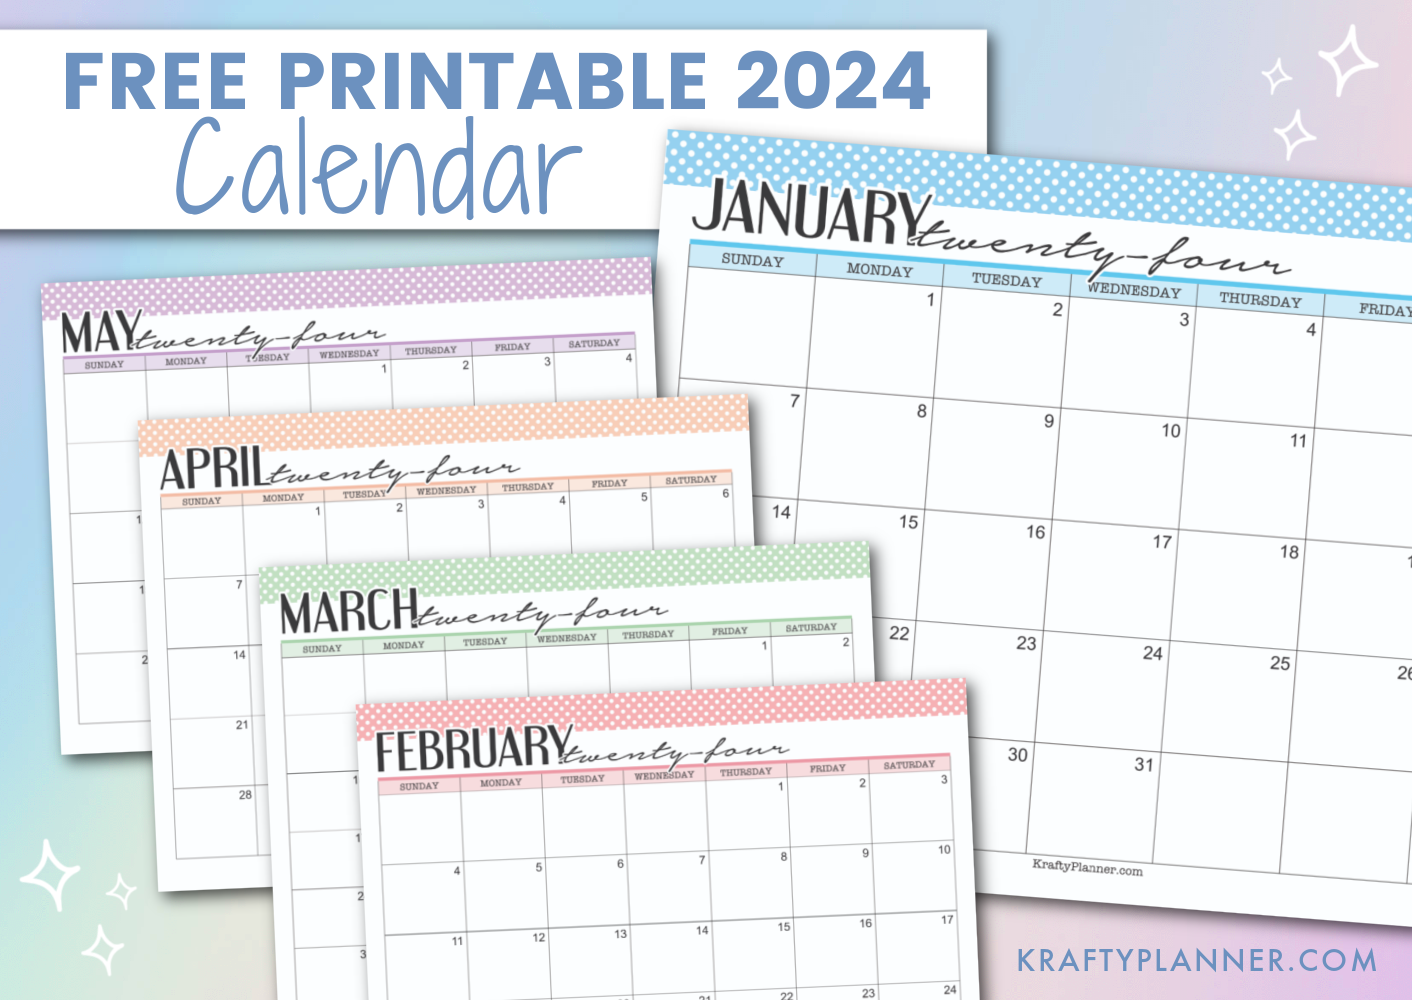 Free Printable 2024 Calendars (Color) — Krafty Planner for 2024 Calendar Printable Color